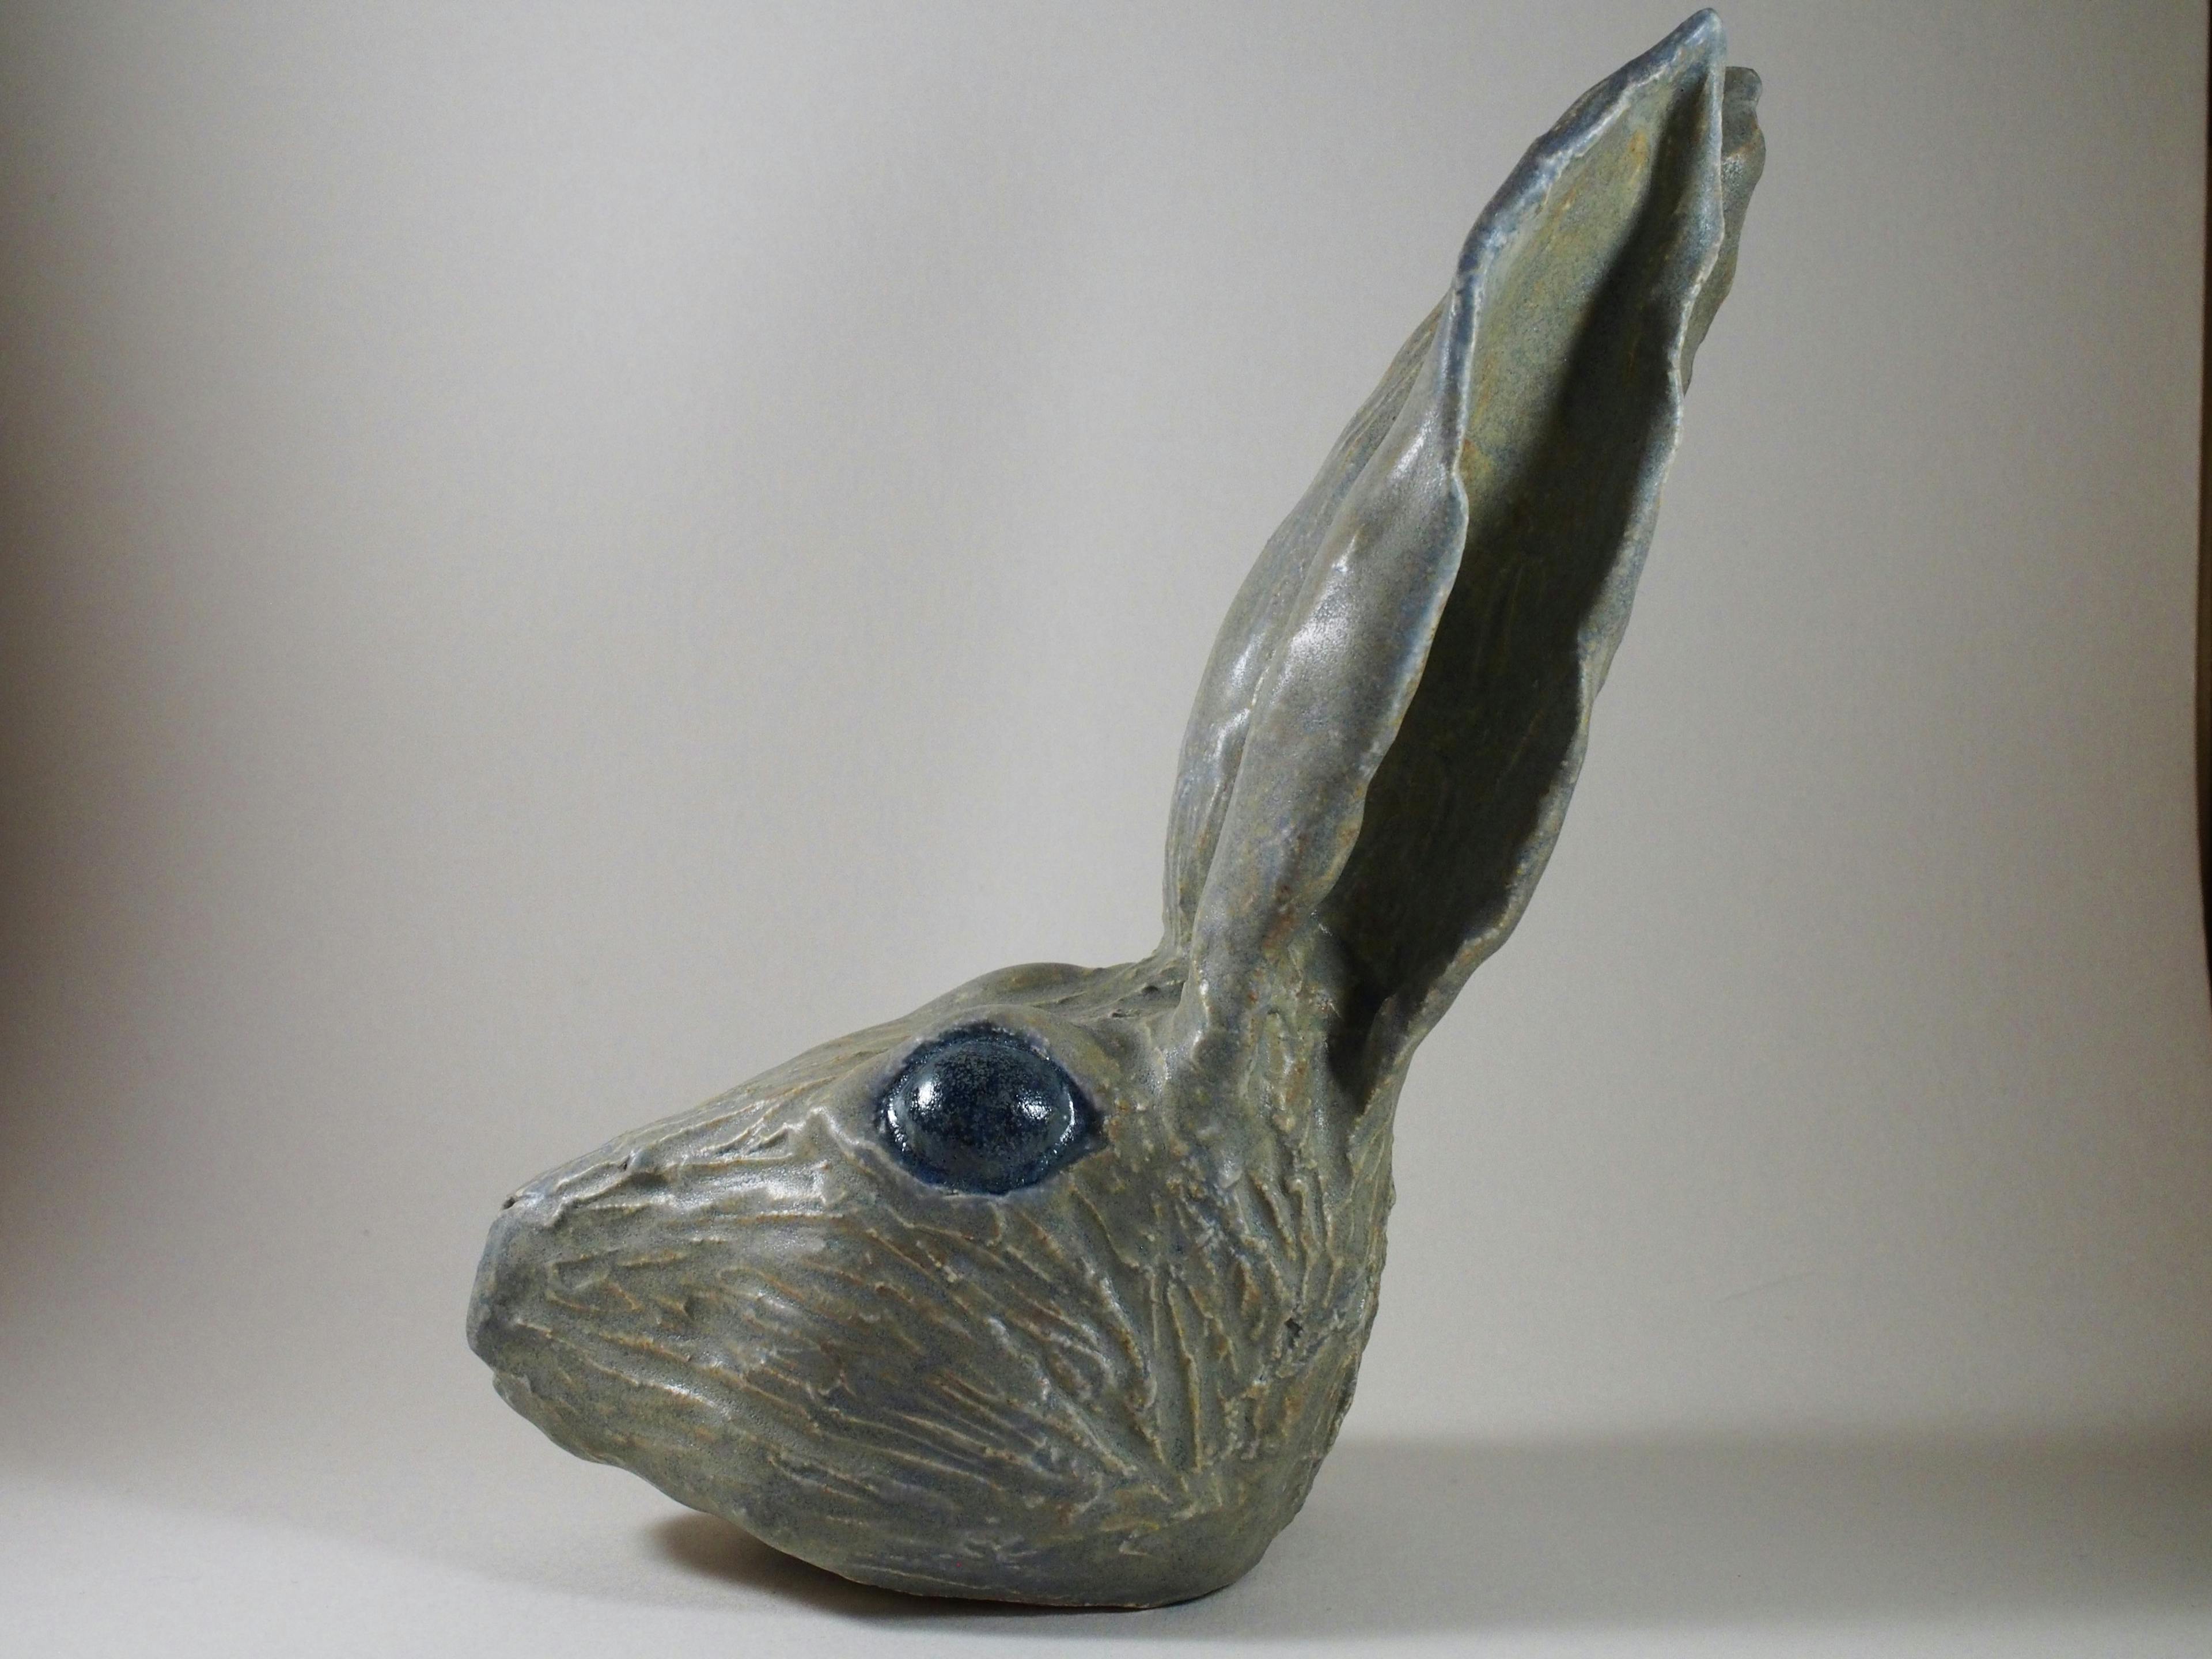 Hare's head